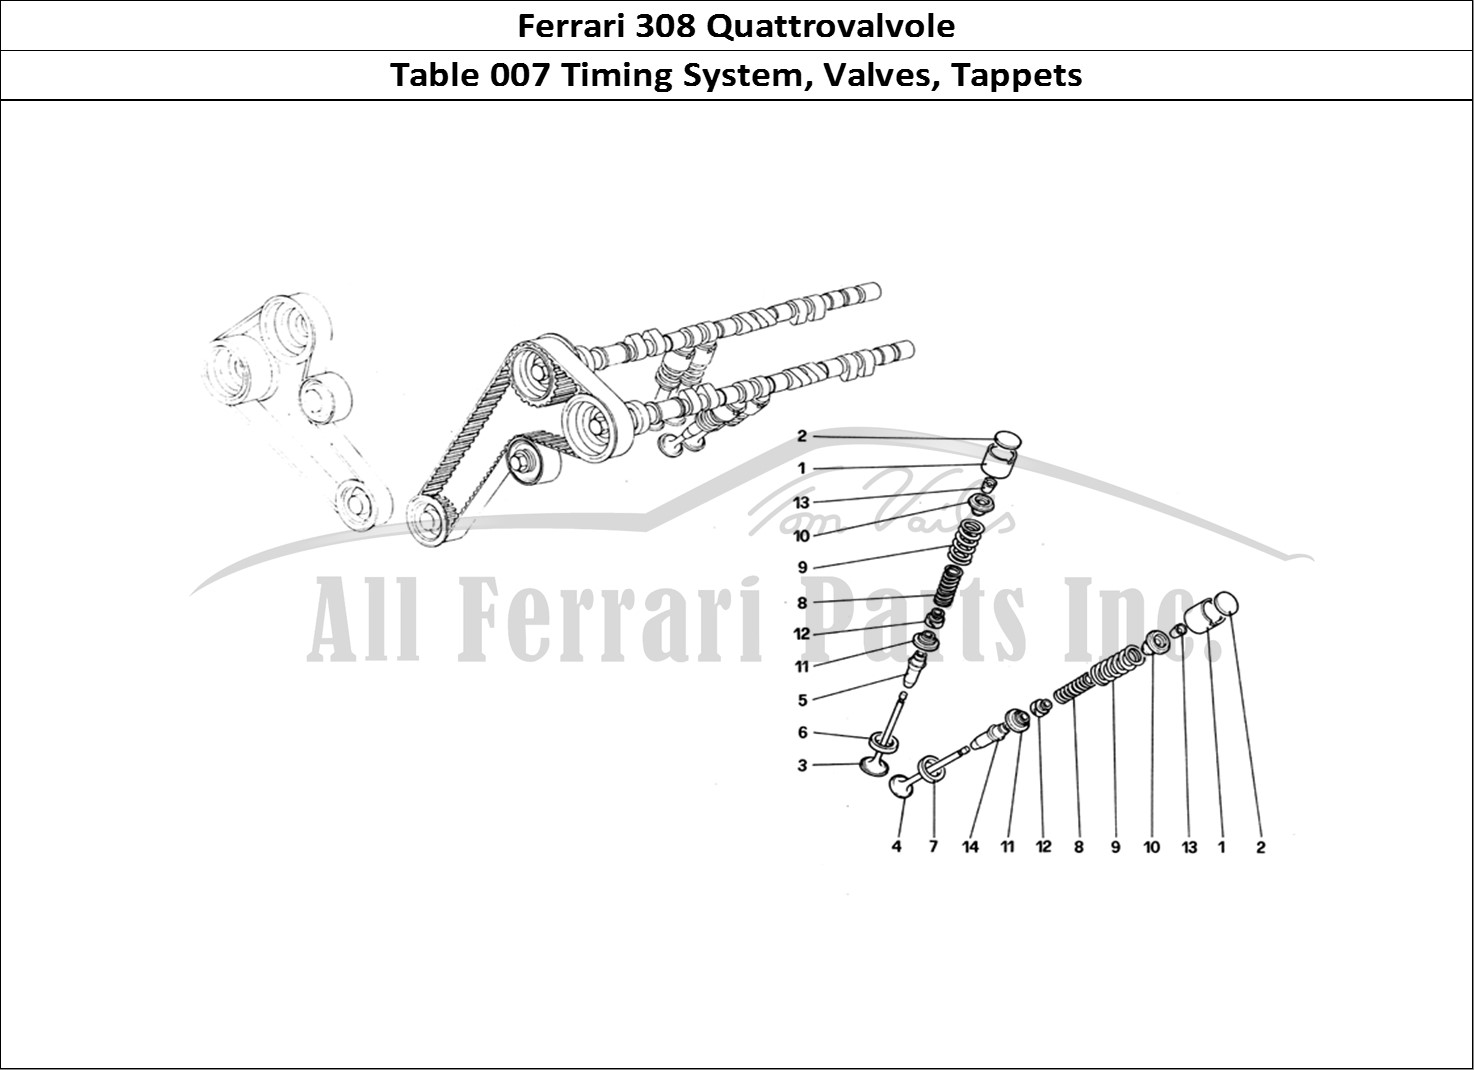 Ferrari Parts Ferrari 308 Quattrovalvole (1985) Page 007 Timing System - Tappets